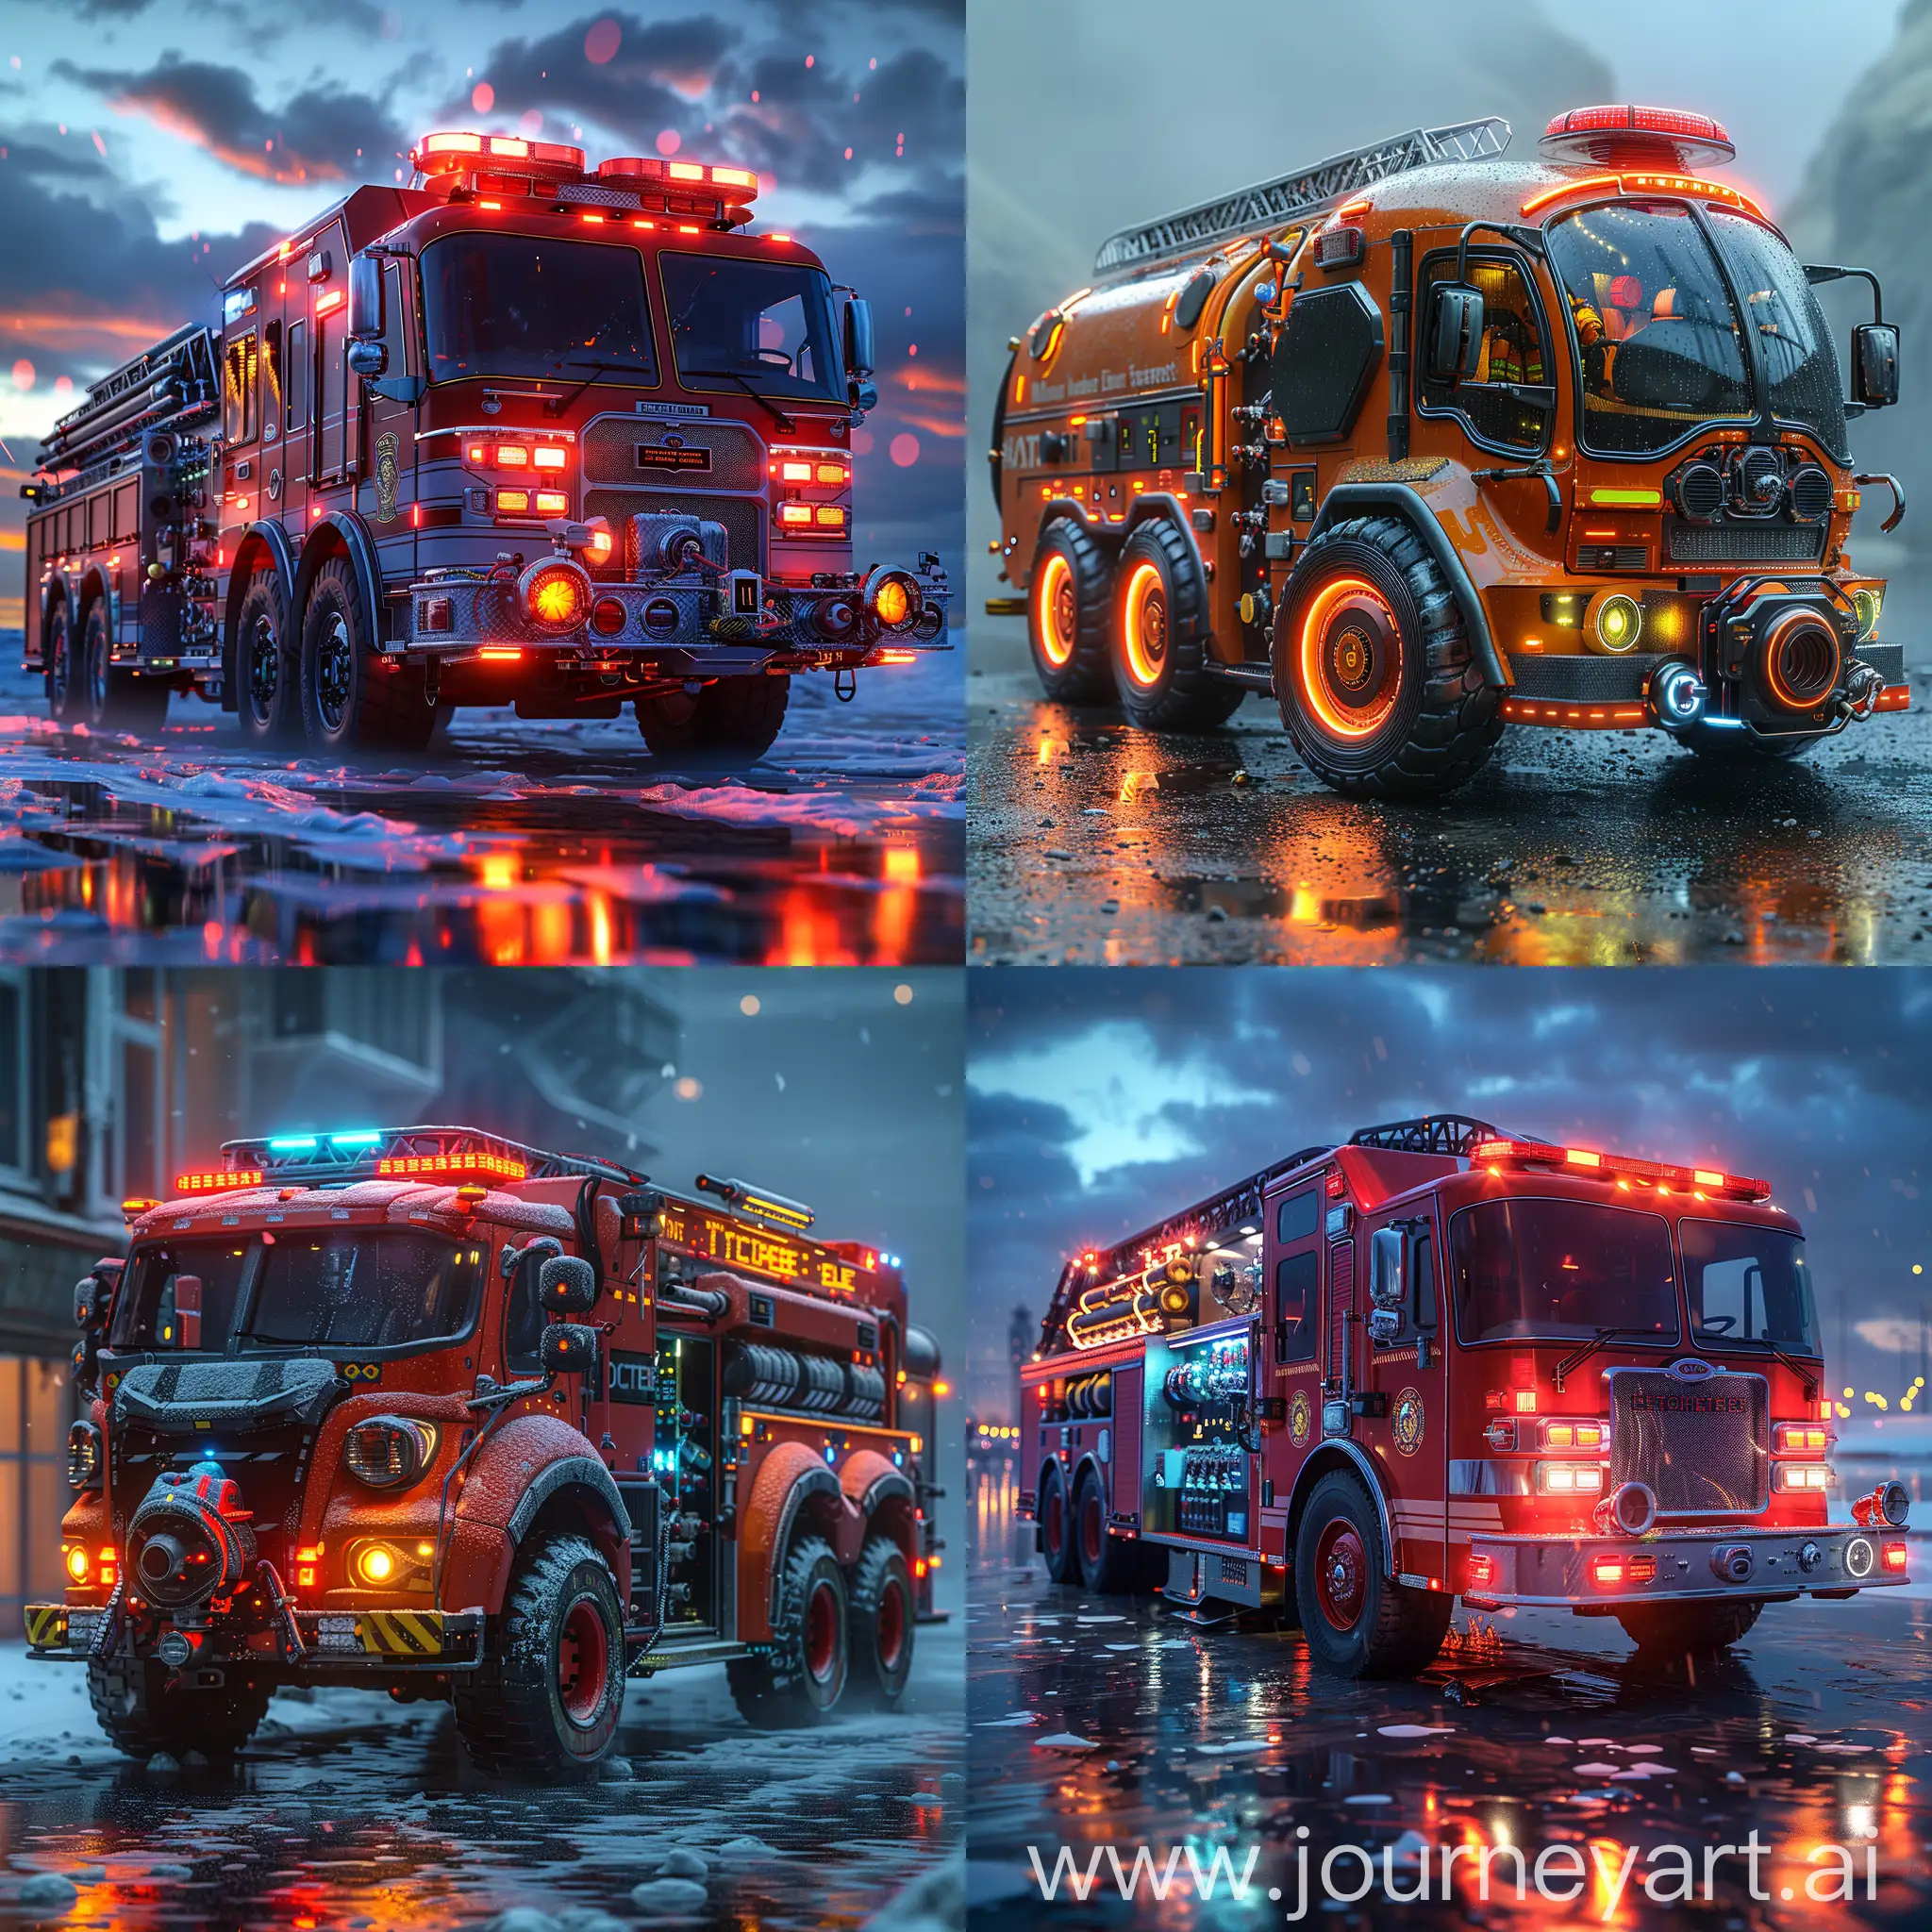 Advanced-Nanotech-Fire-Truck-EcoFriendly-Innovations-for-Future-Firefighting